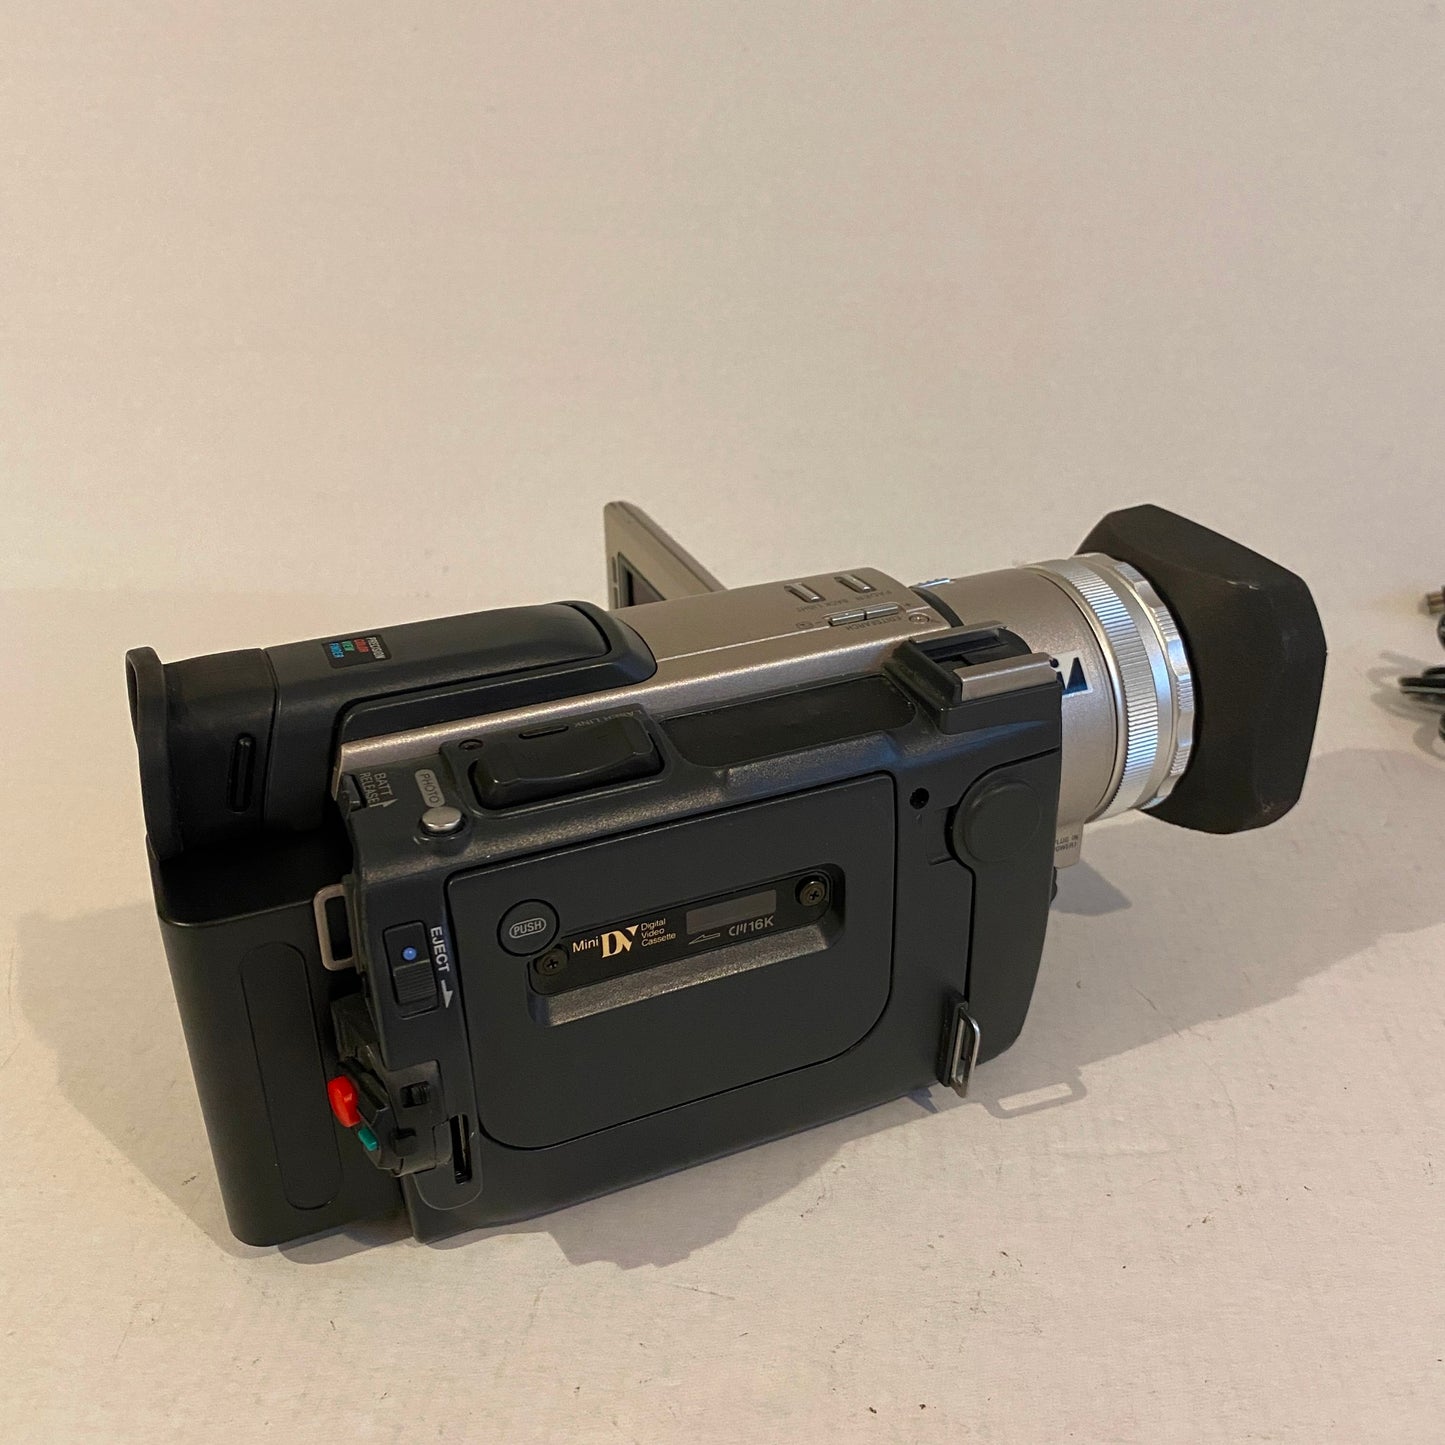 Sony Mini DV Handycam Digital Video Camera - DCR-TRV900